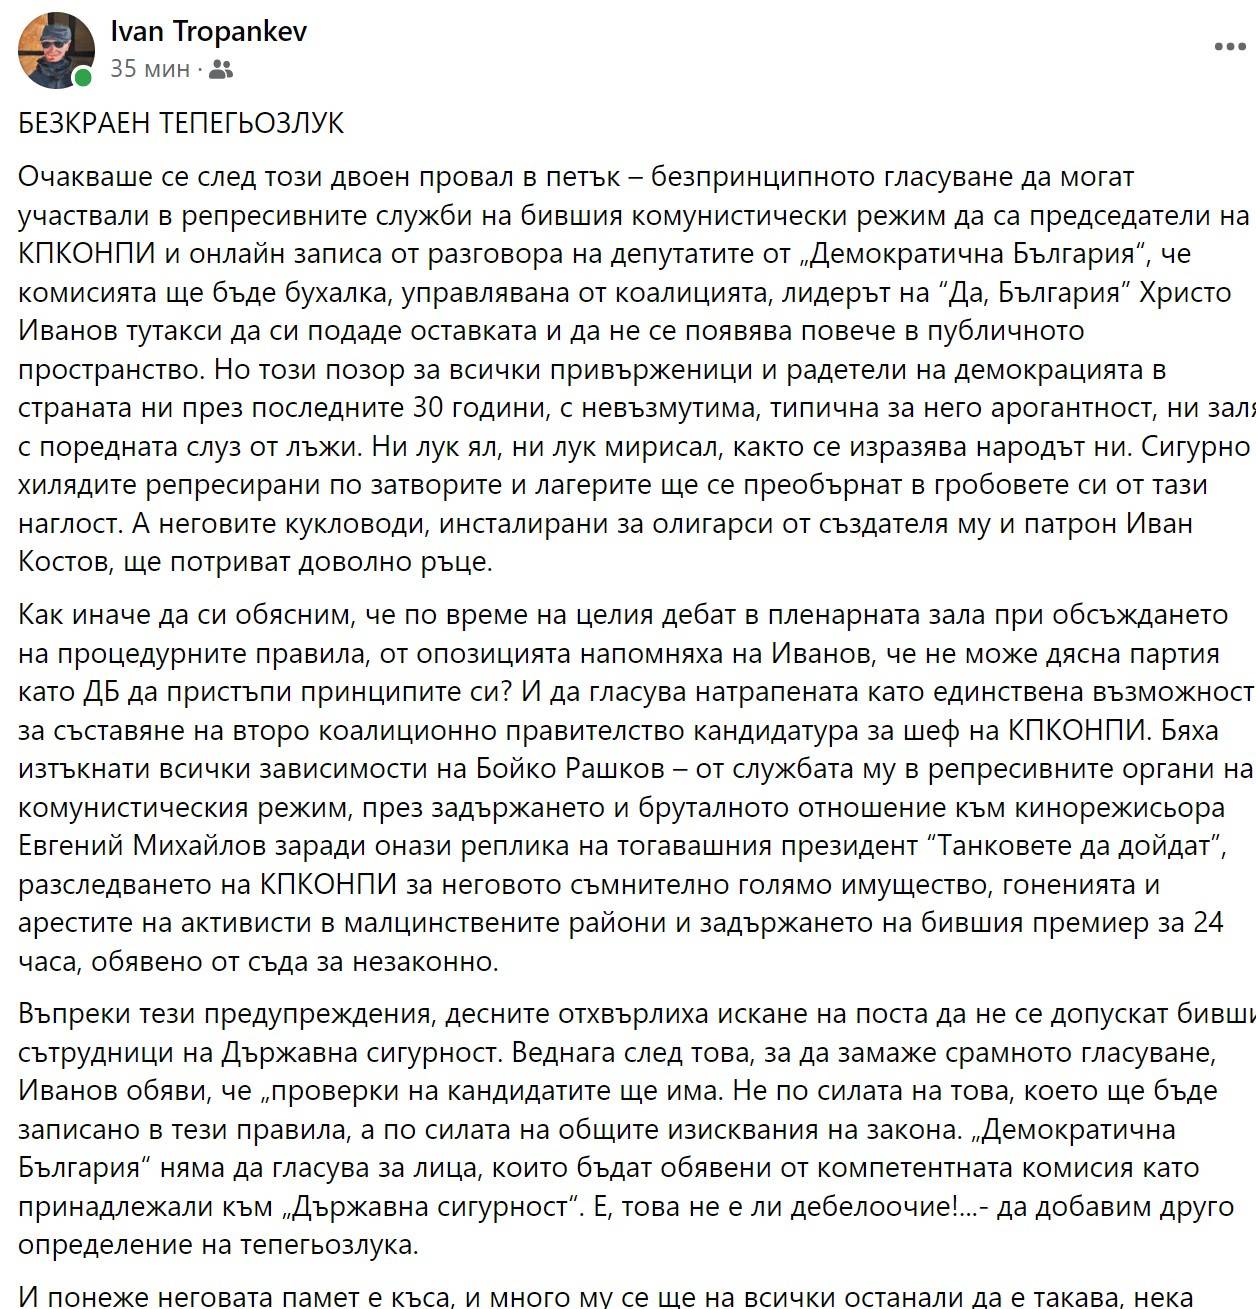 Постът на Иван Тропанкев